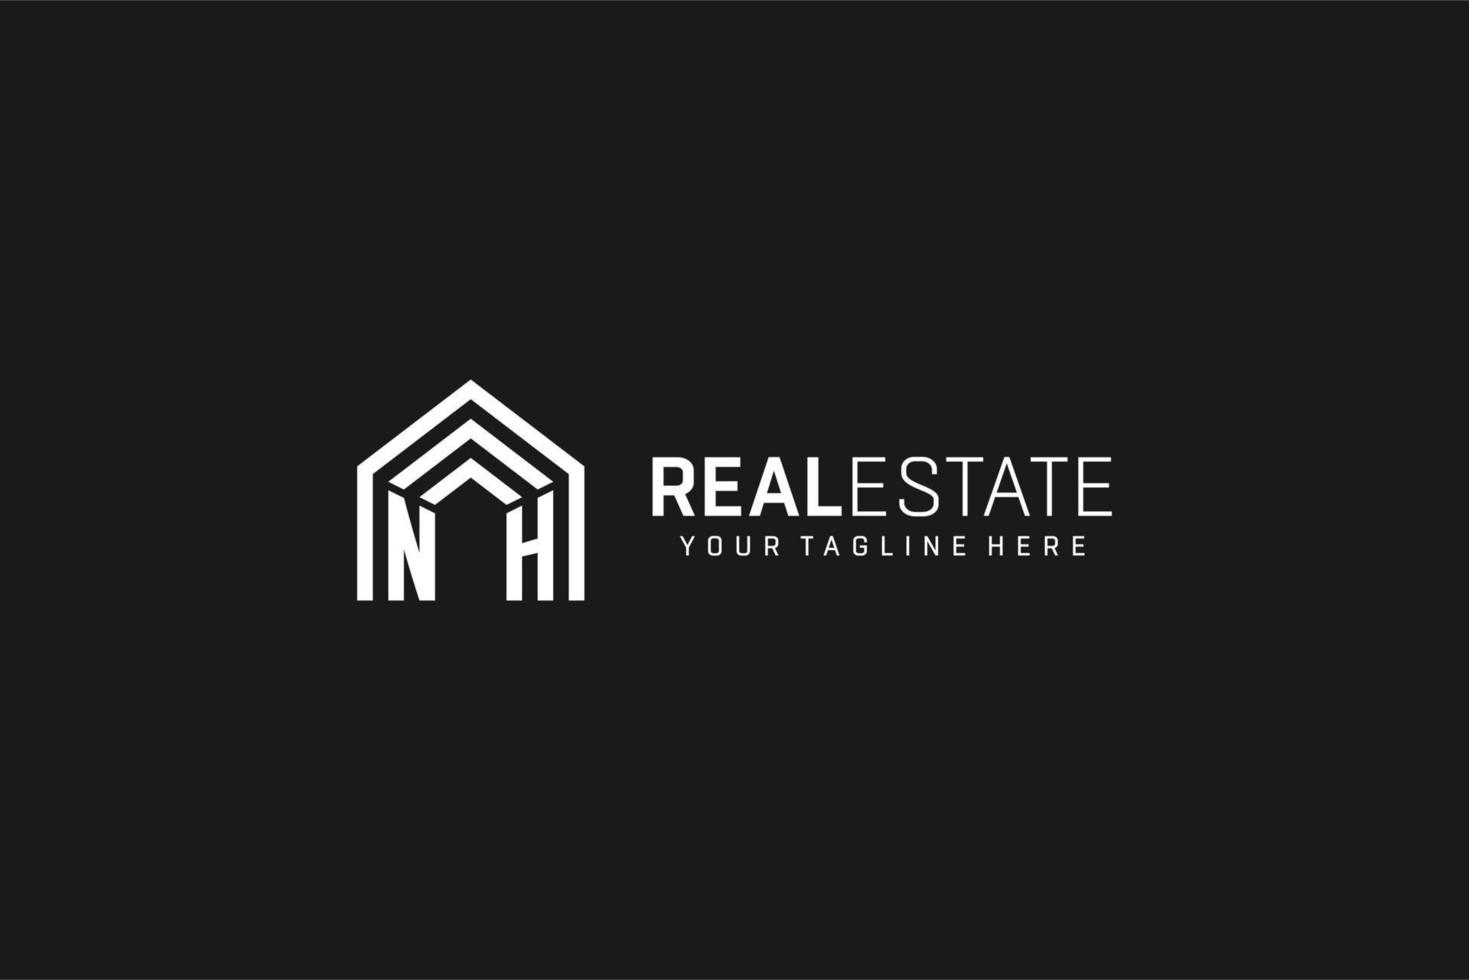 Letter NH house roof shape logo, creative real estate monogram logo